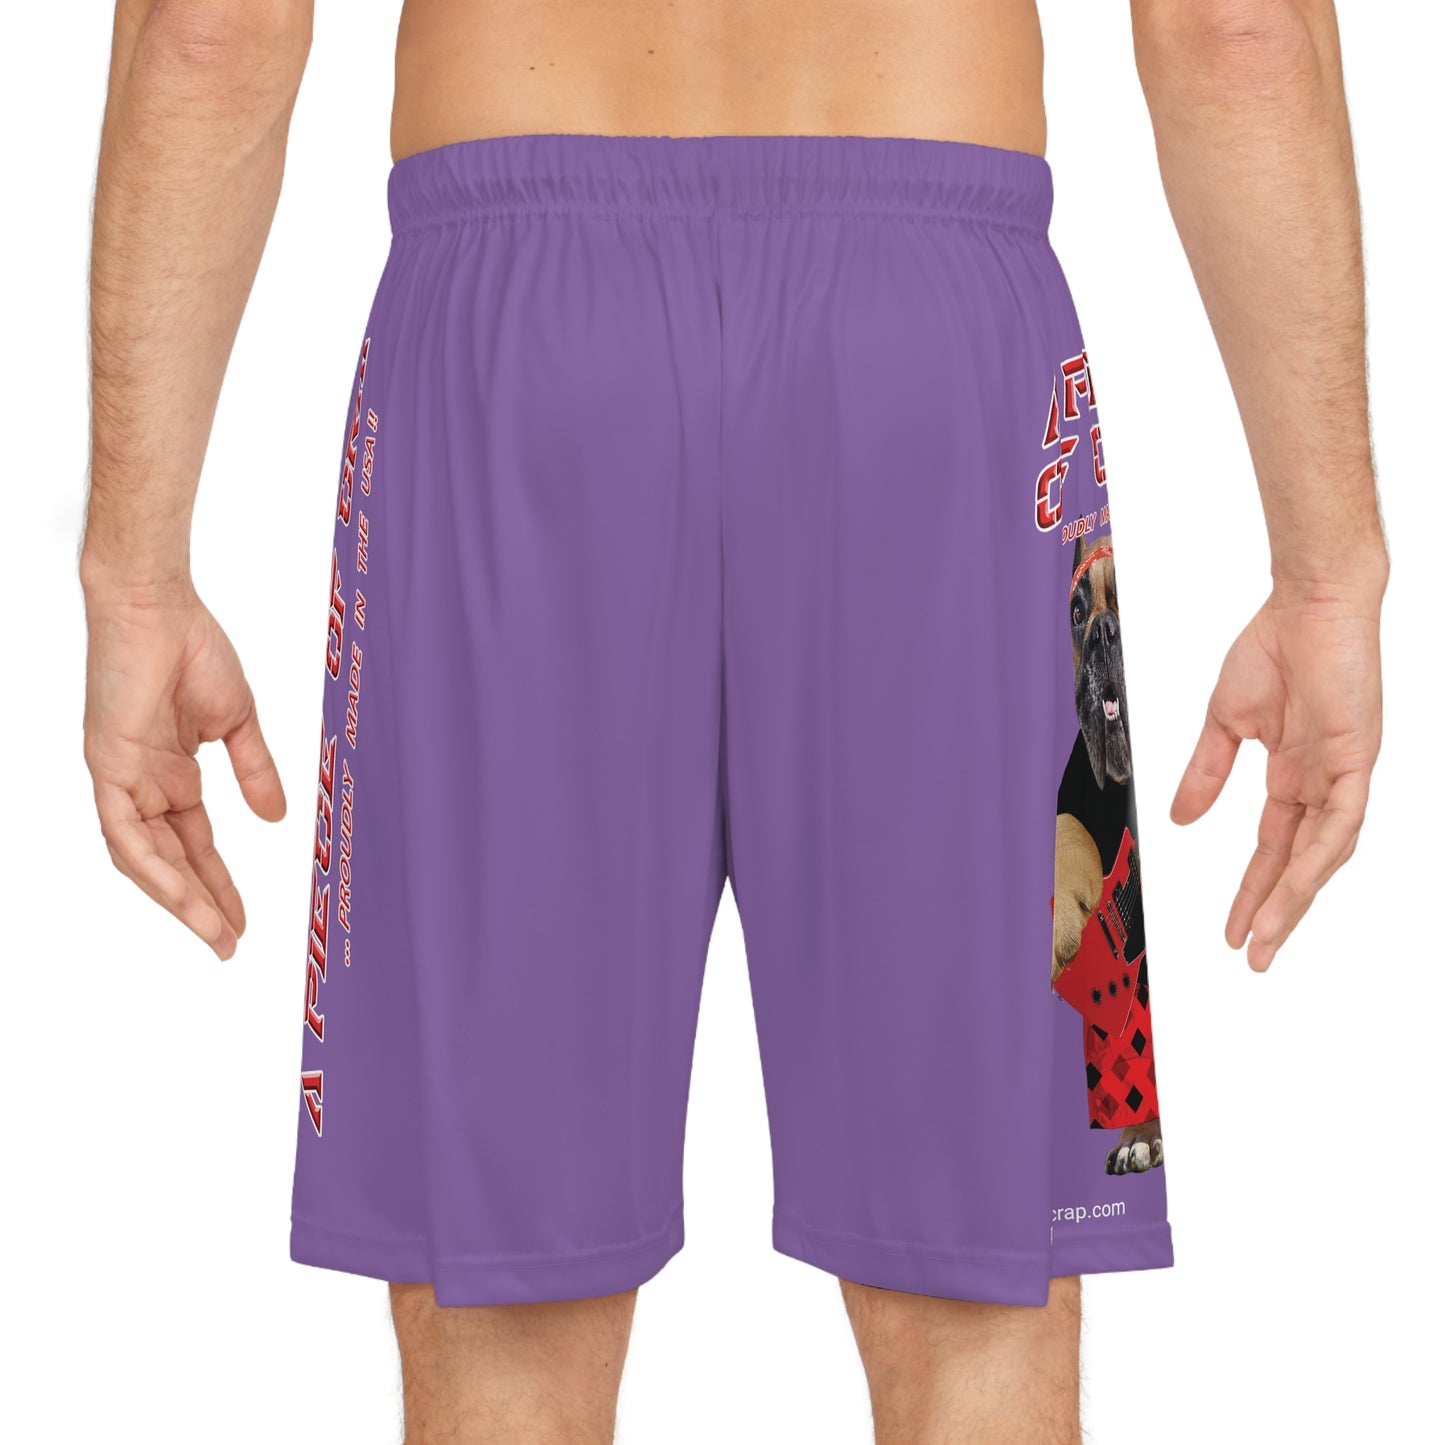 A Piece Of Crap II Basketball Shorts - Light Purple